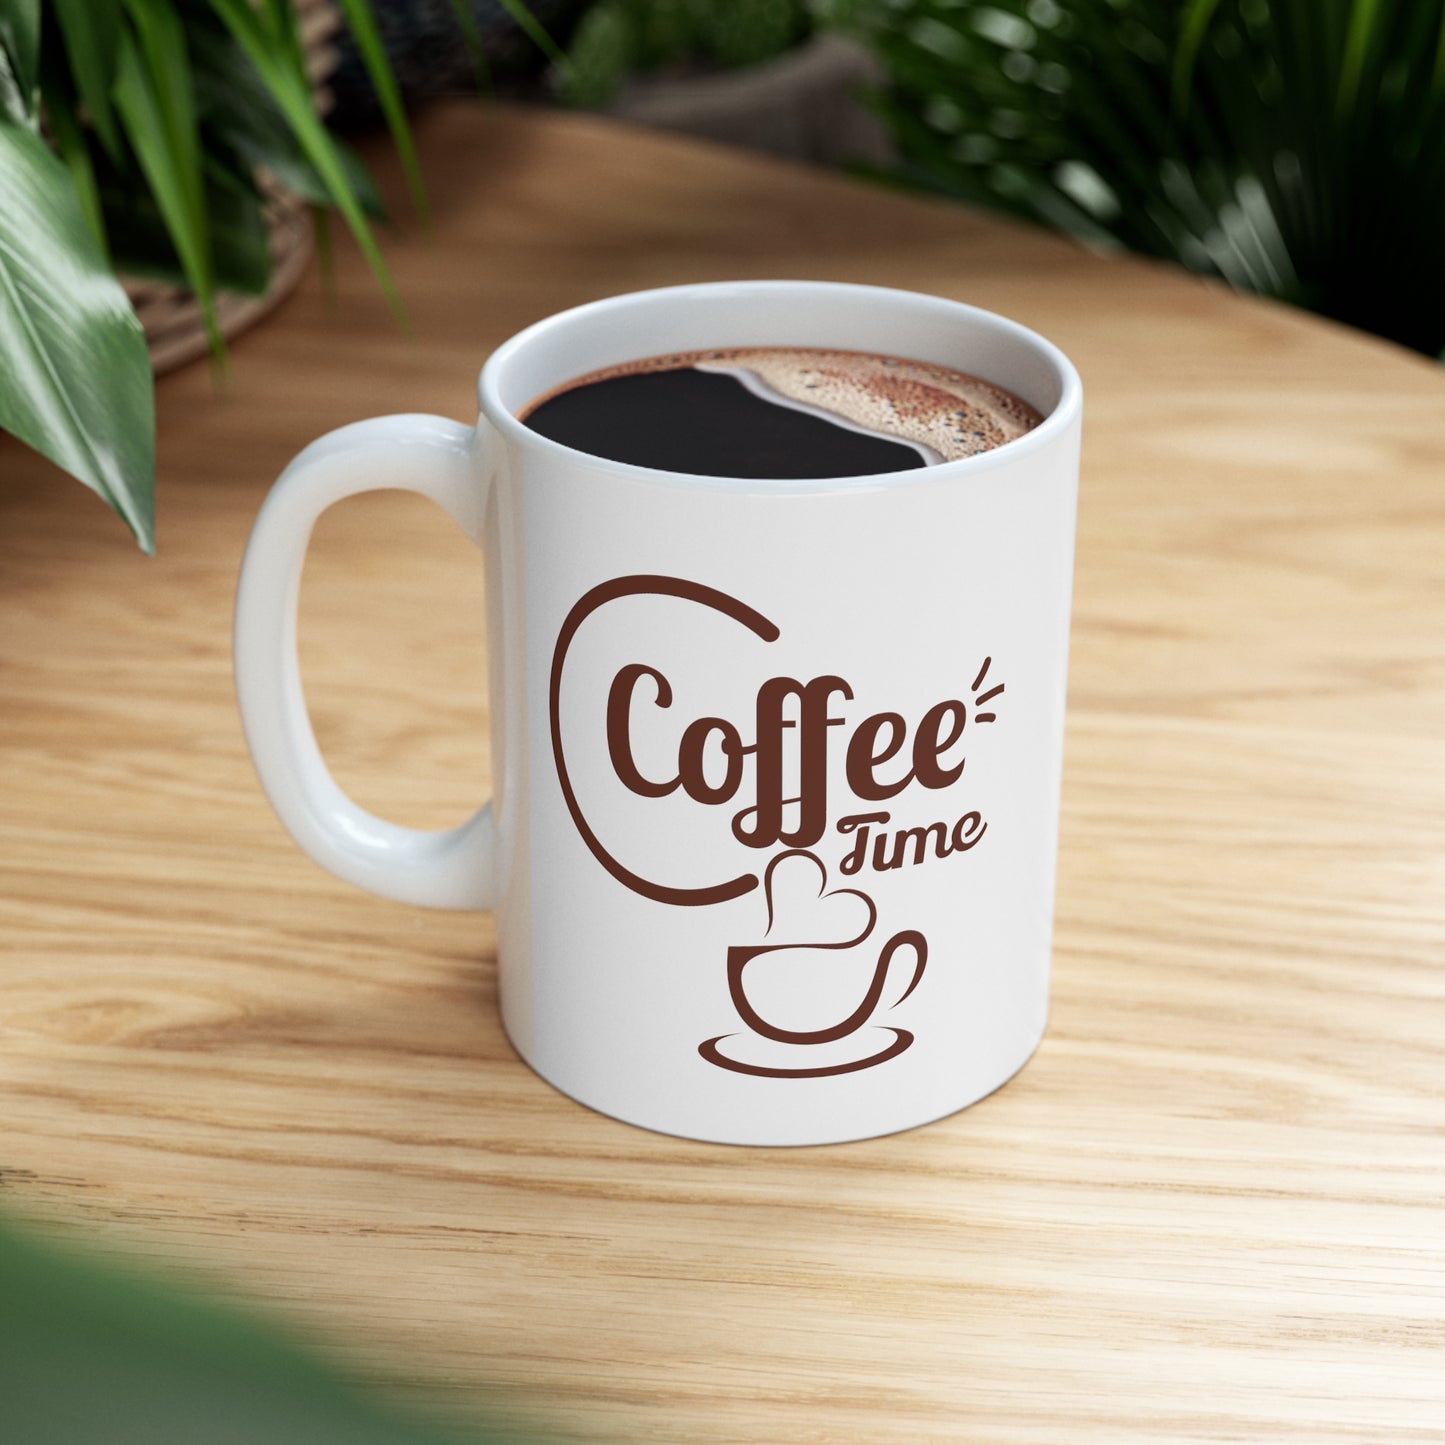 Ceramic Mug 11oz - Coffee time